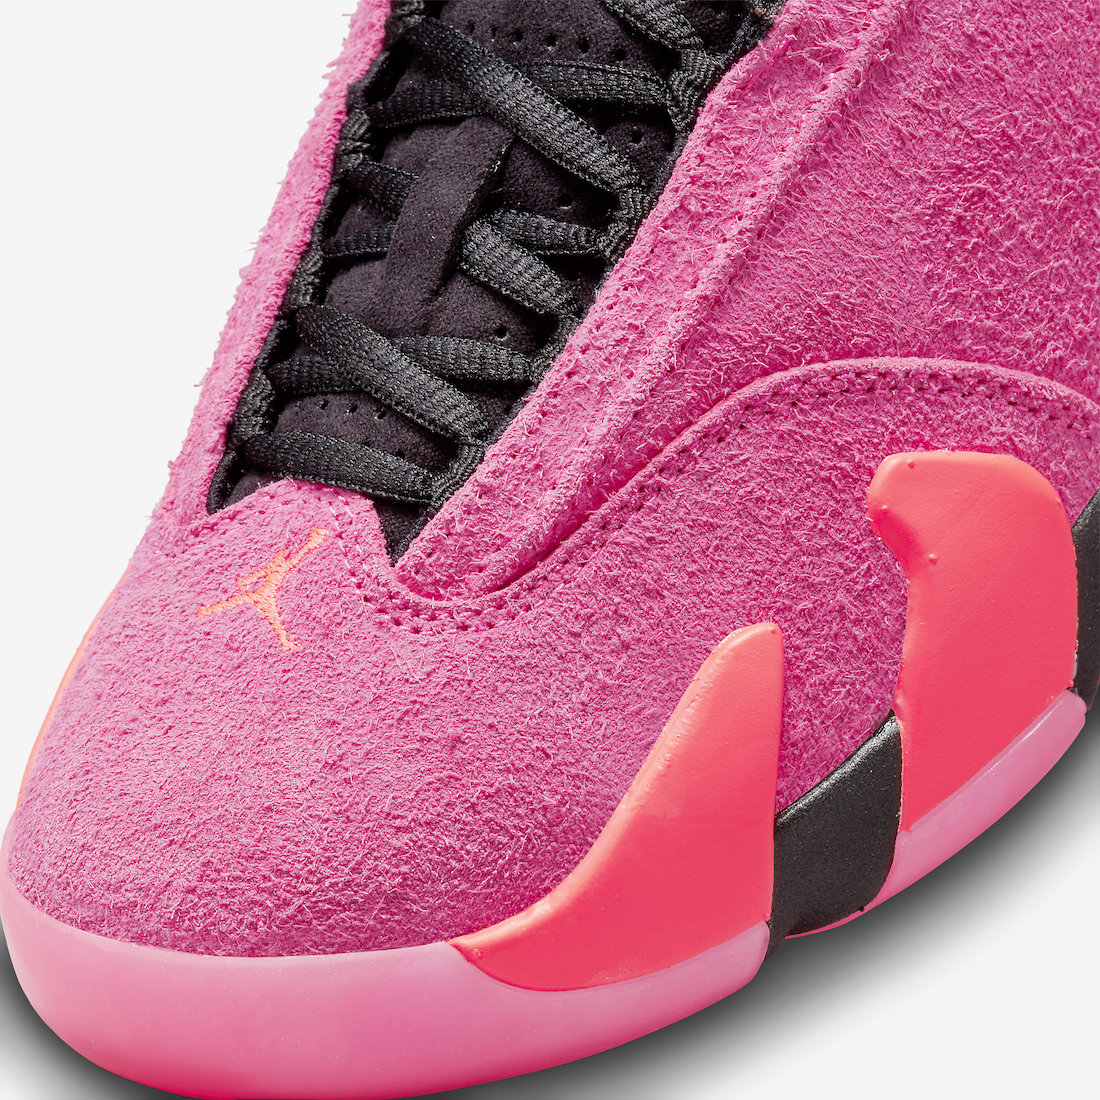 Air Jordan 14 Low Shocking Pink Blast DH4121-600 Release Date